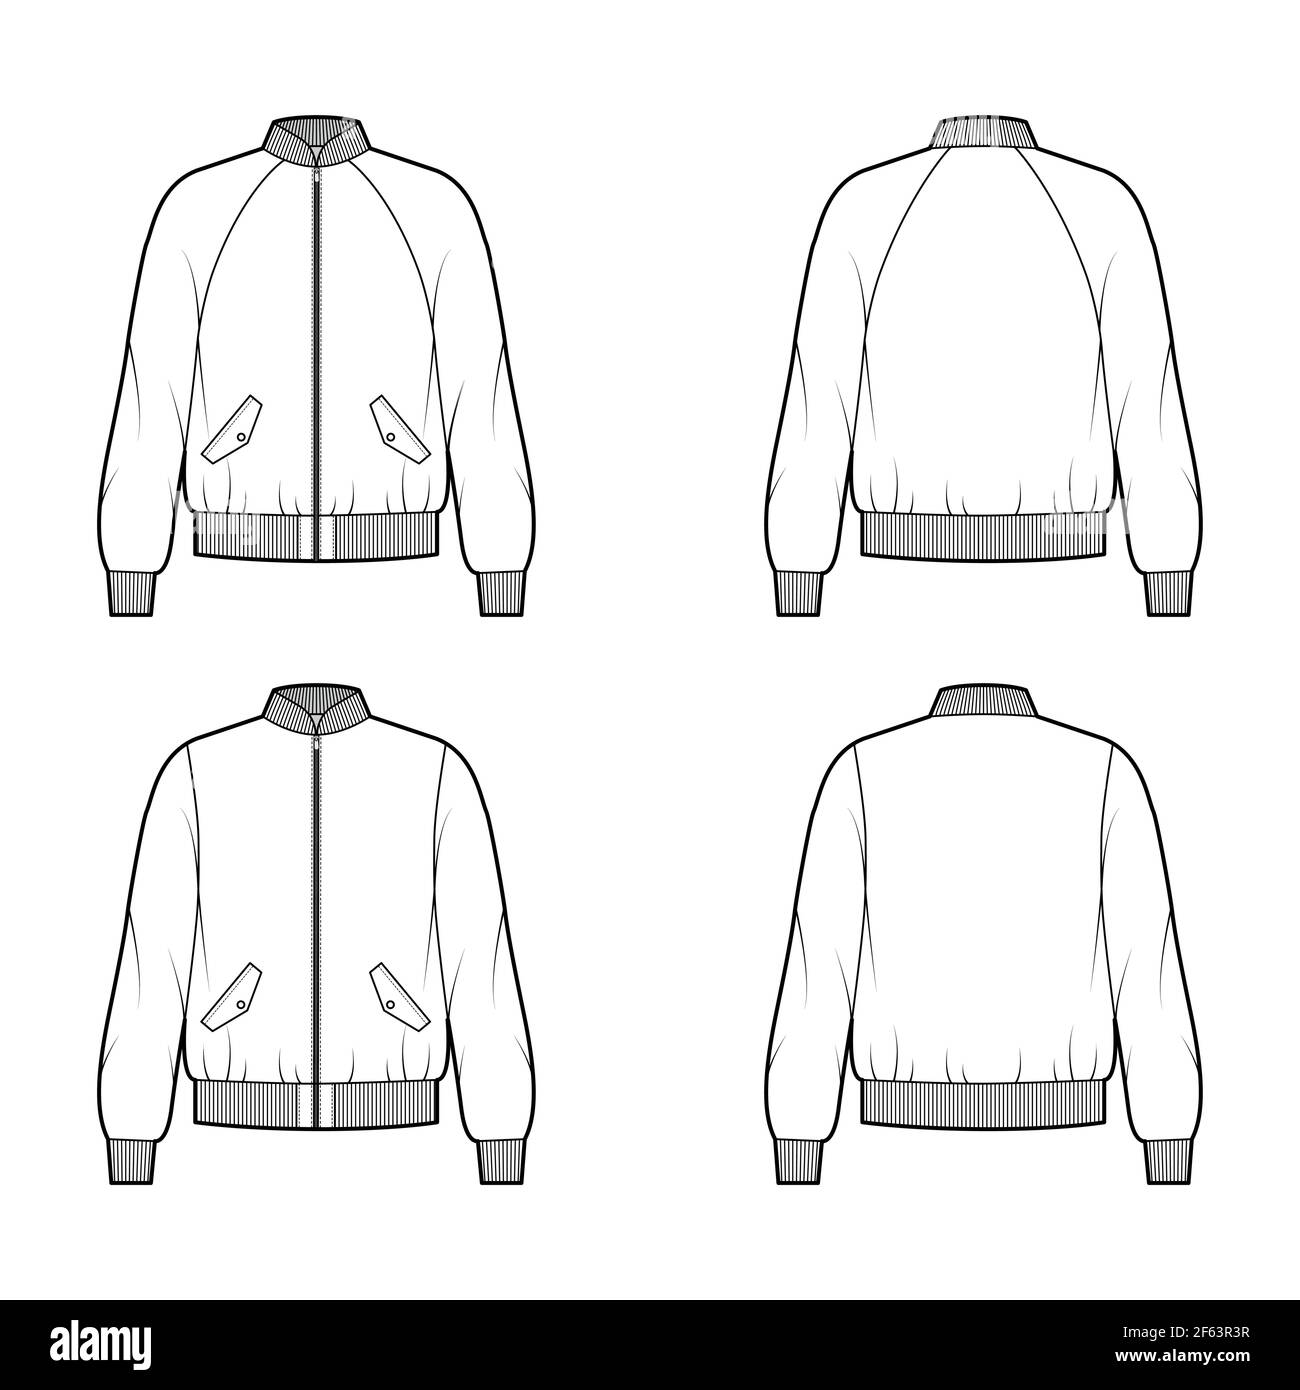 Uniform jackets Stock Vector Images - Alamy